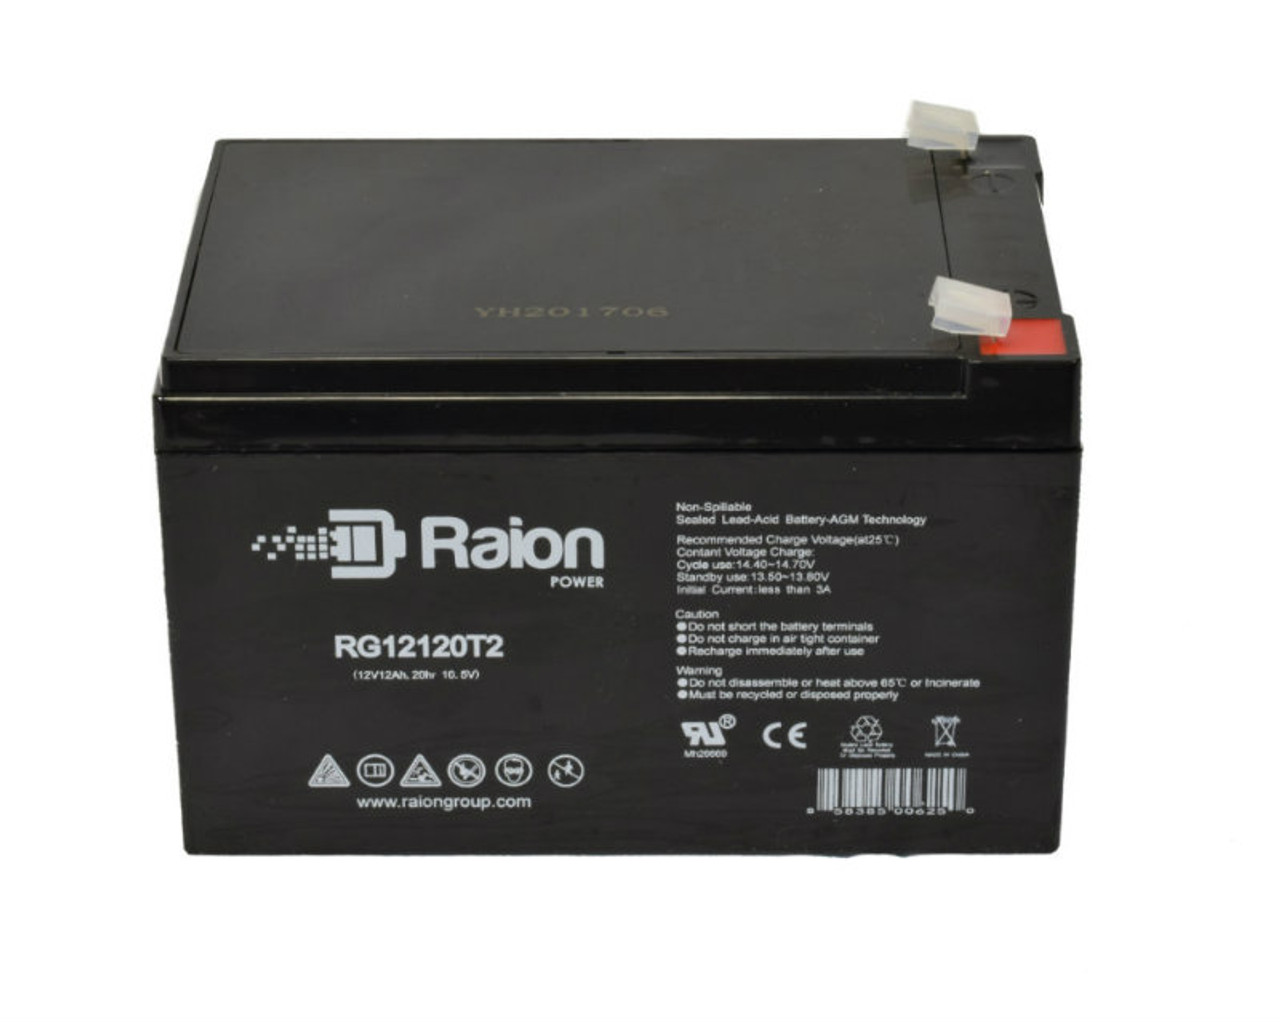 Raion Power RG12120T2 SLA Battery for PBQ HR 15-12